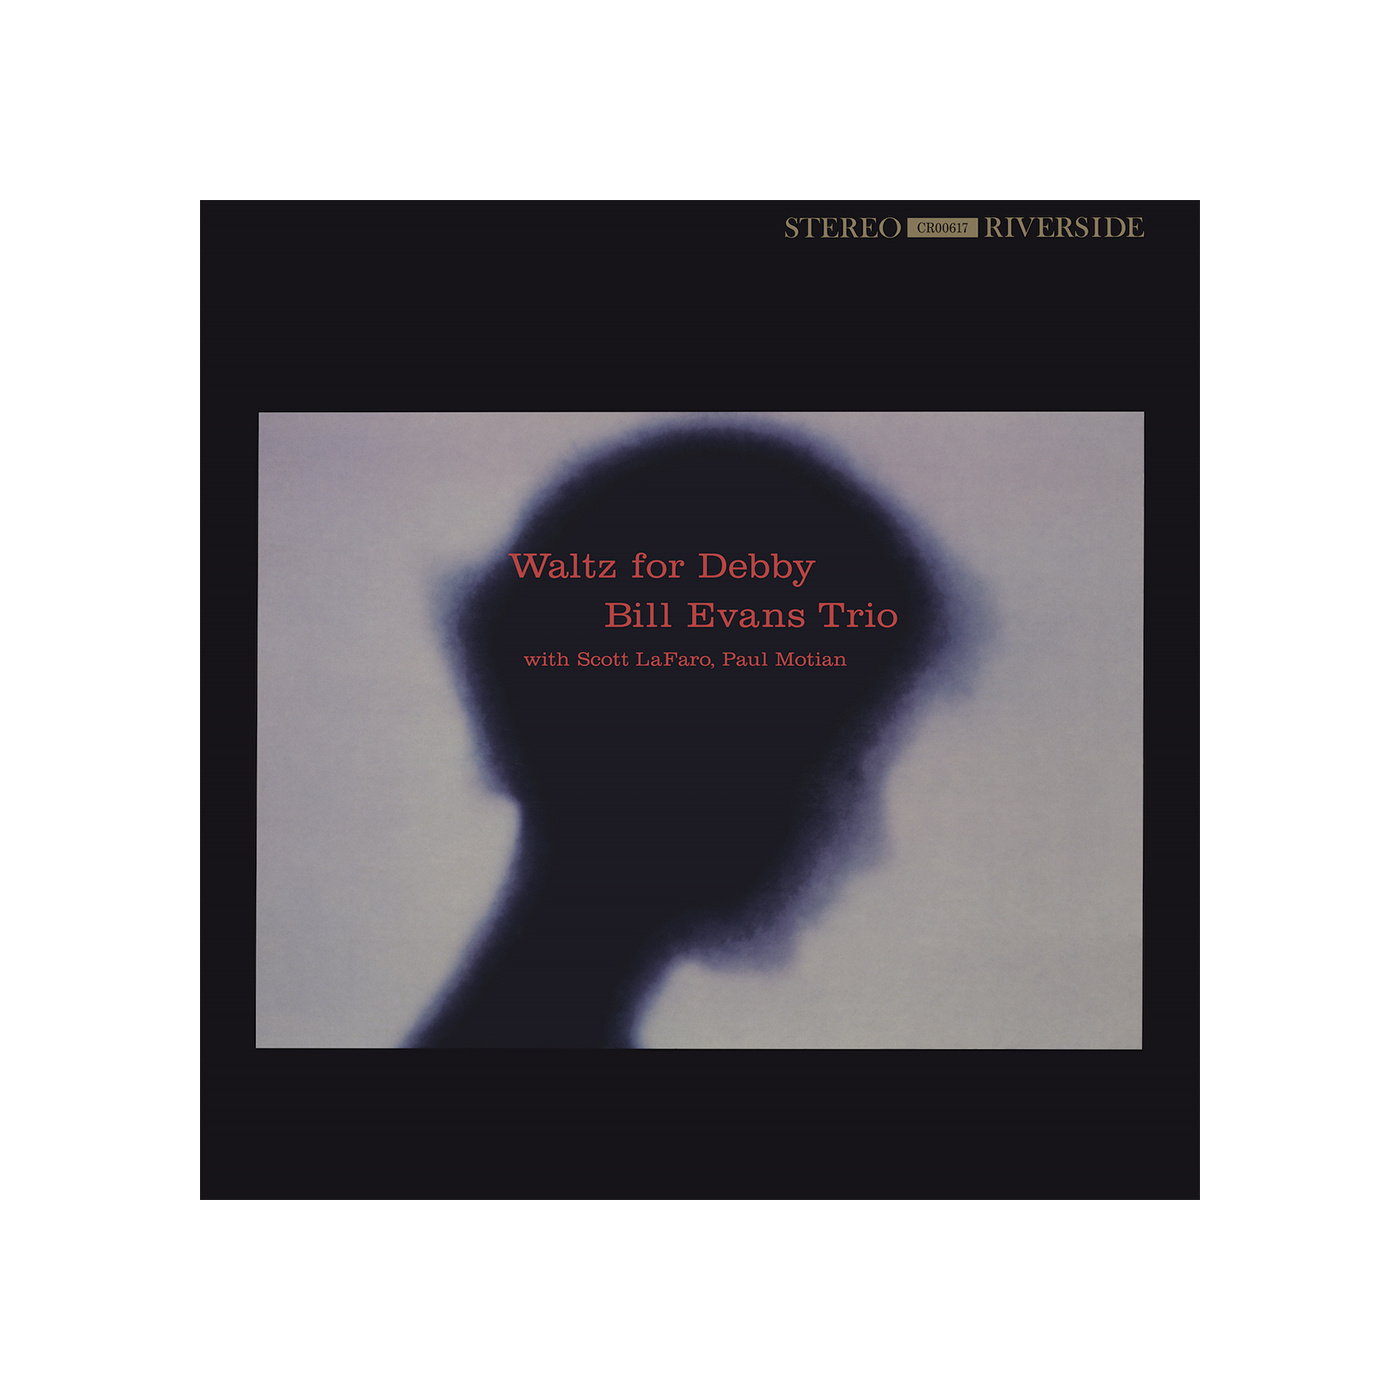 Bill Evans Trio – Waltz For Debby (Original Jazz Classics Series